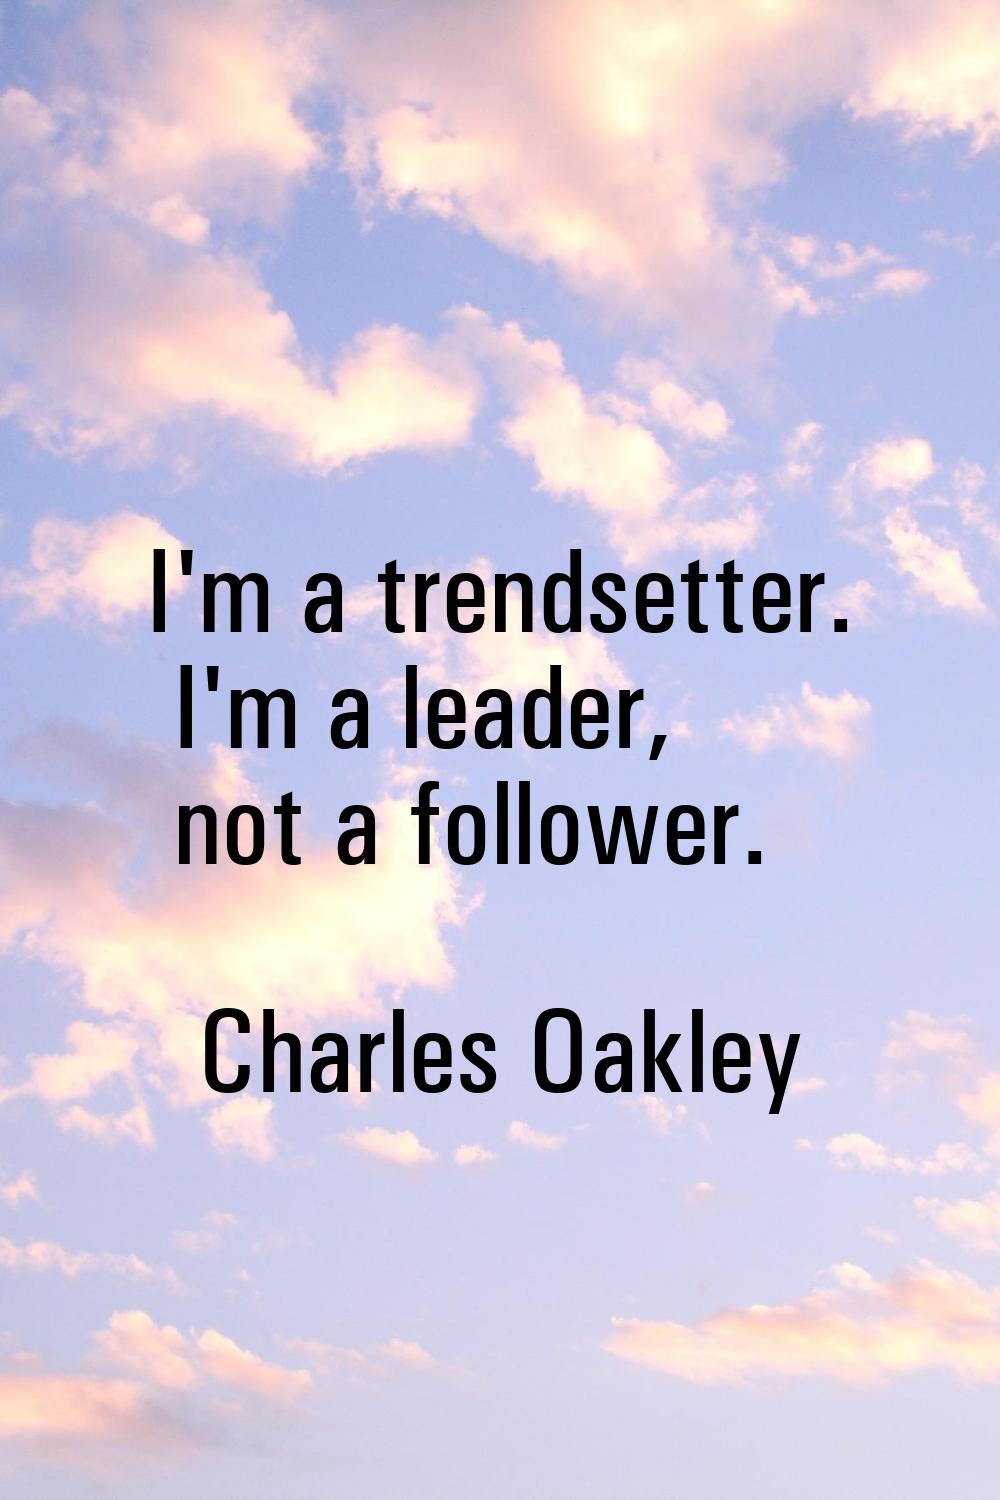 I'm a trendsetter. I'm a leader, not a follower.